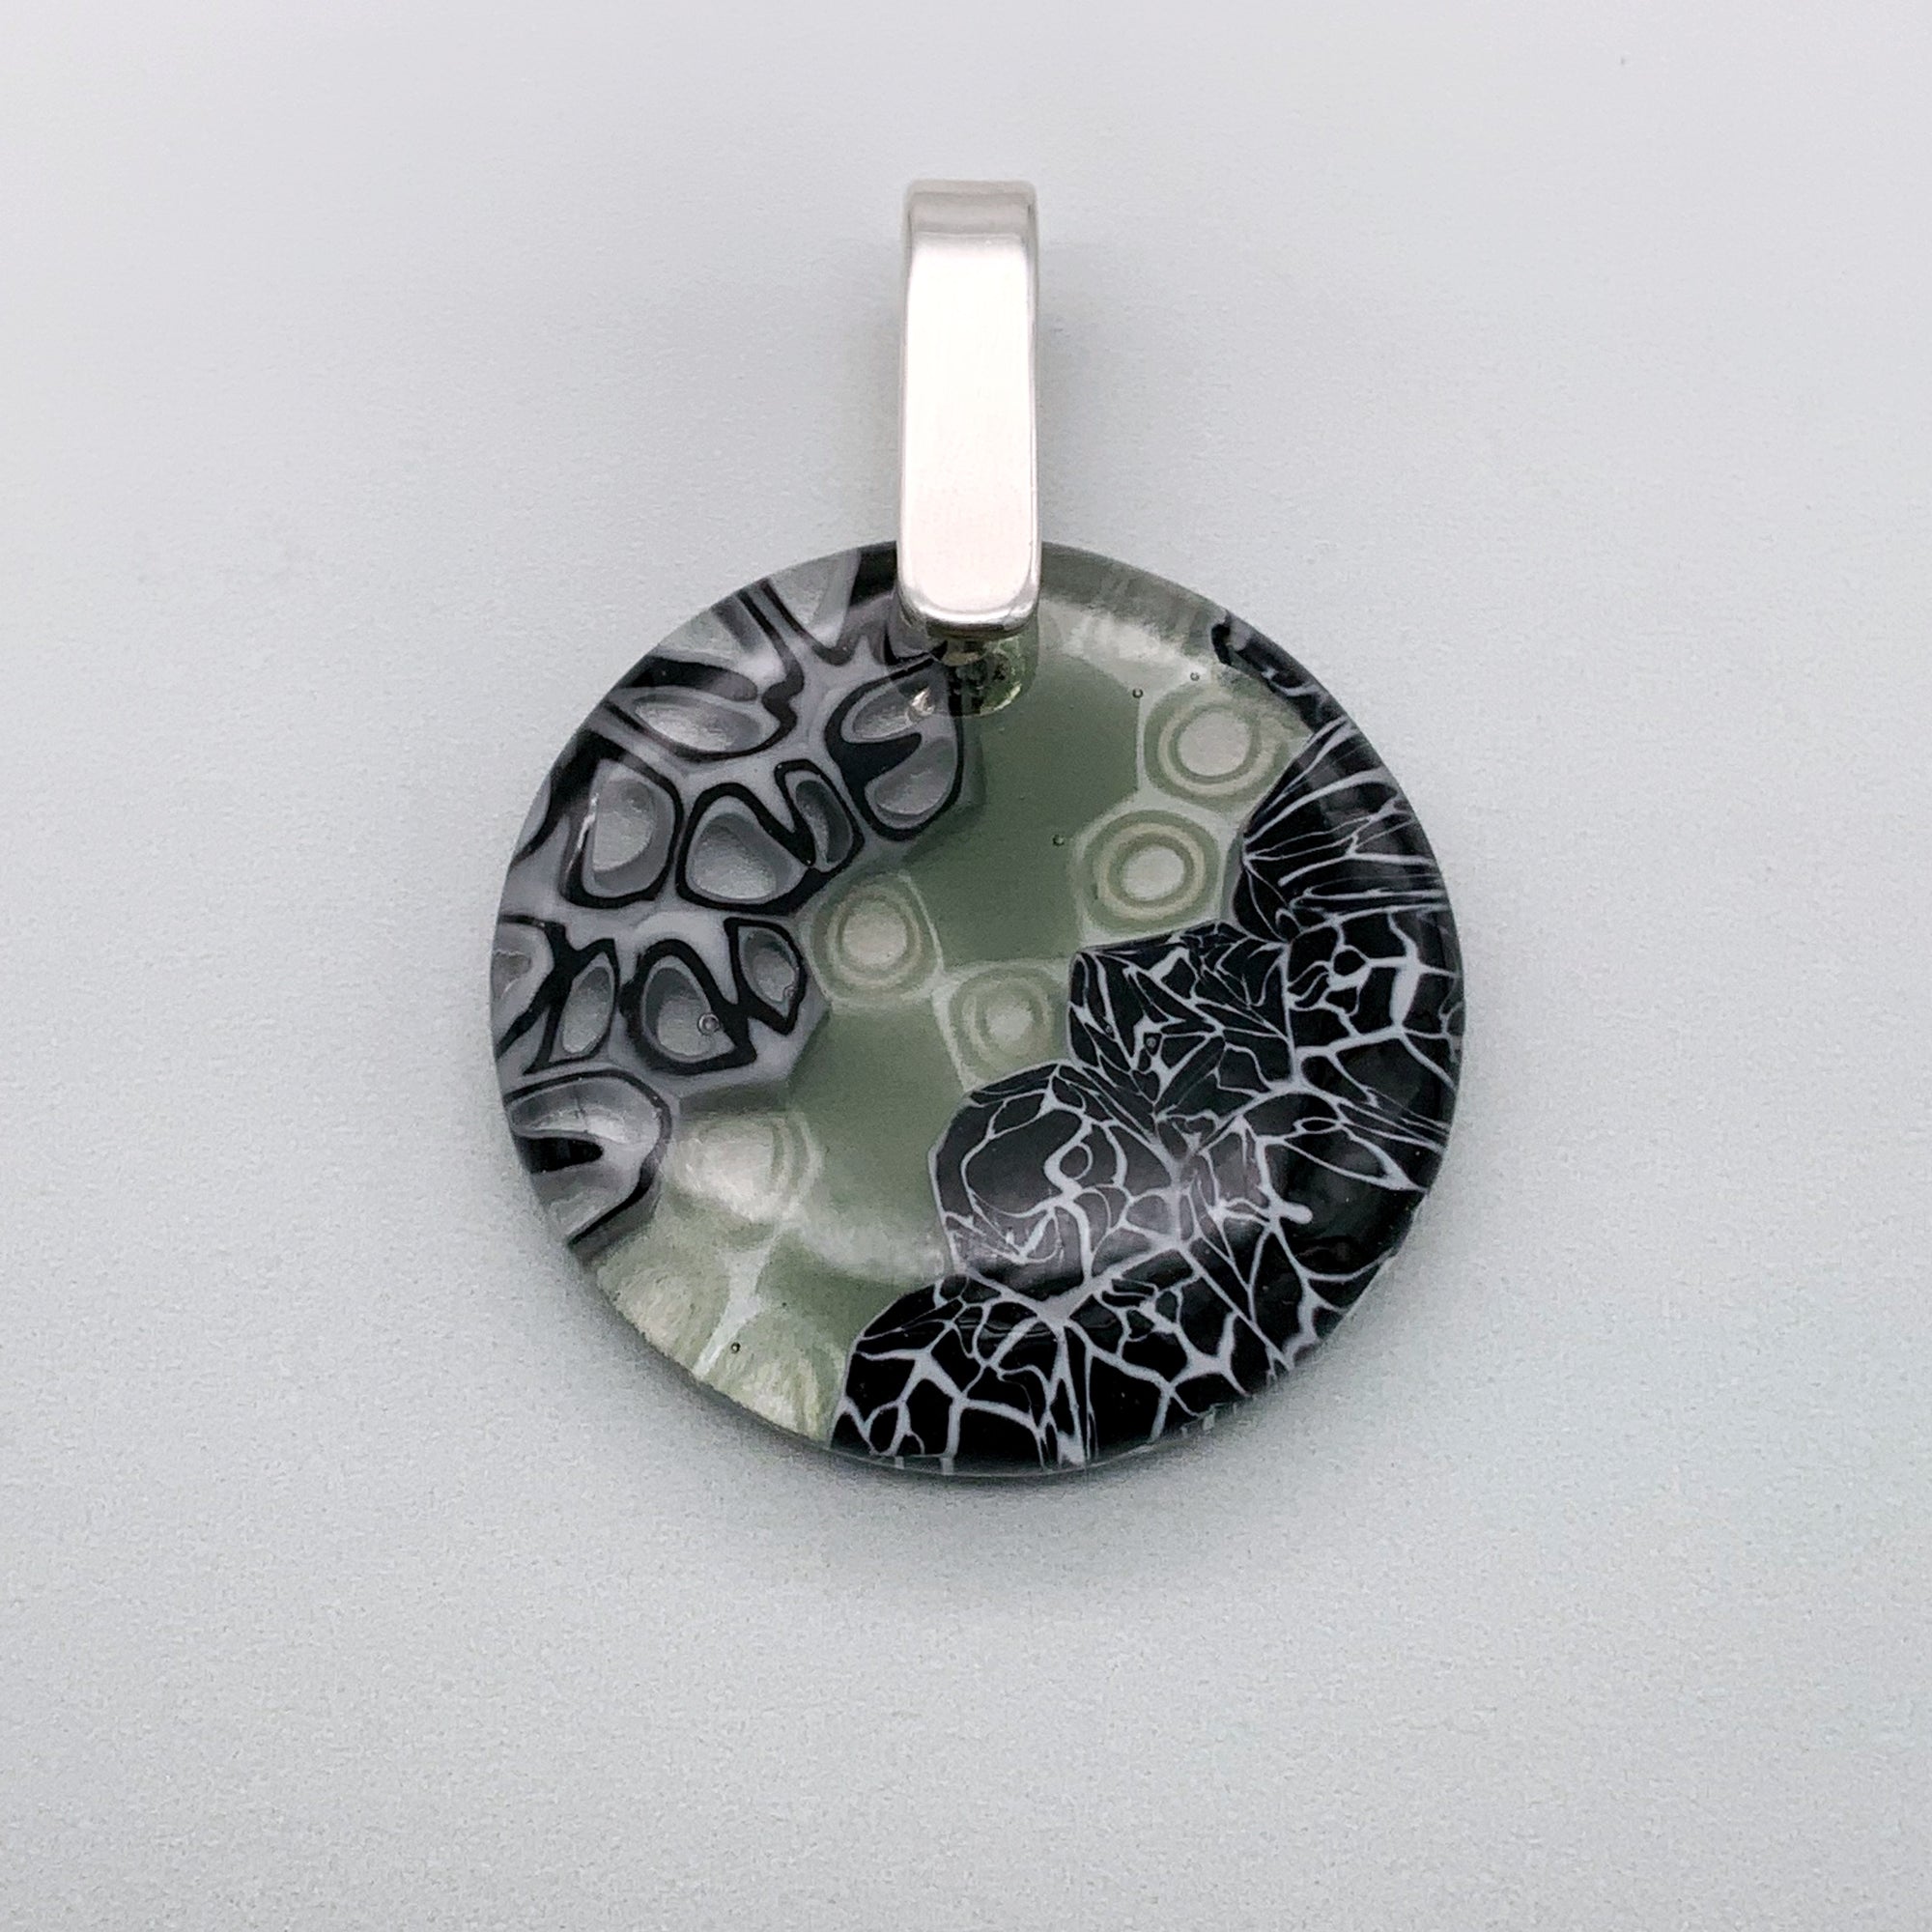 Designer Murrini 35mm round glass pendant in black and grey